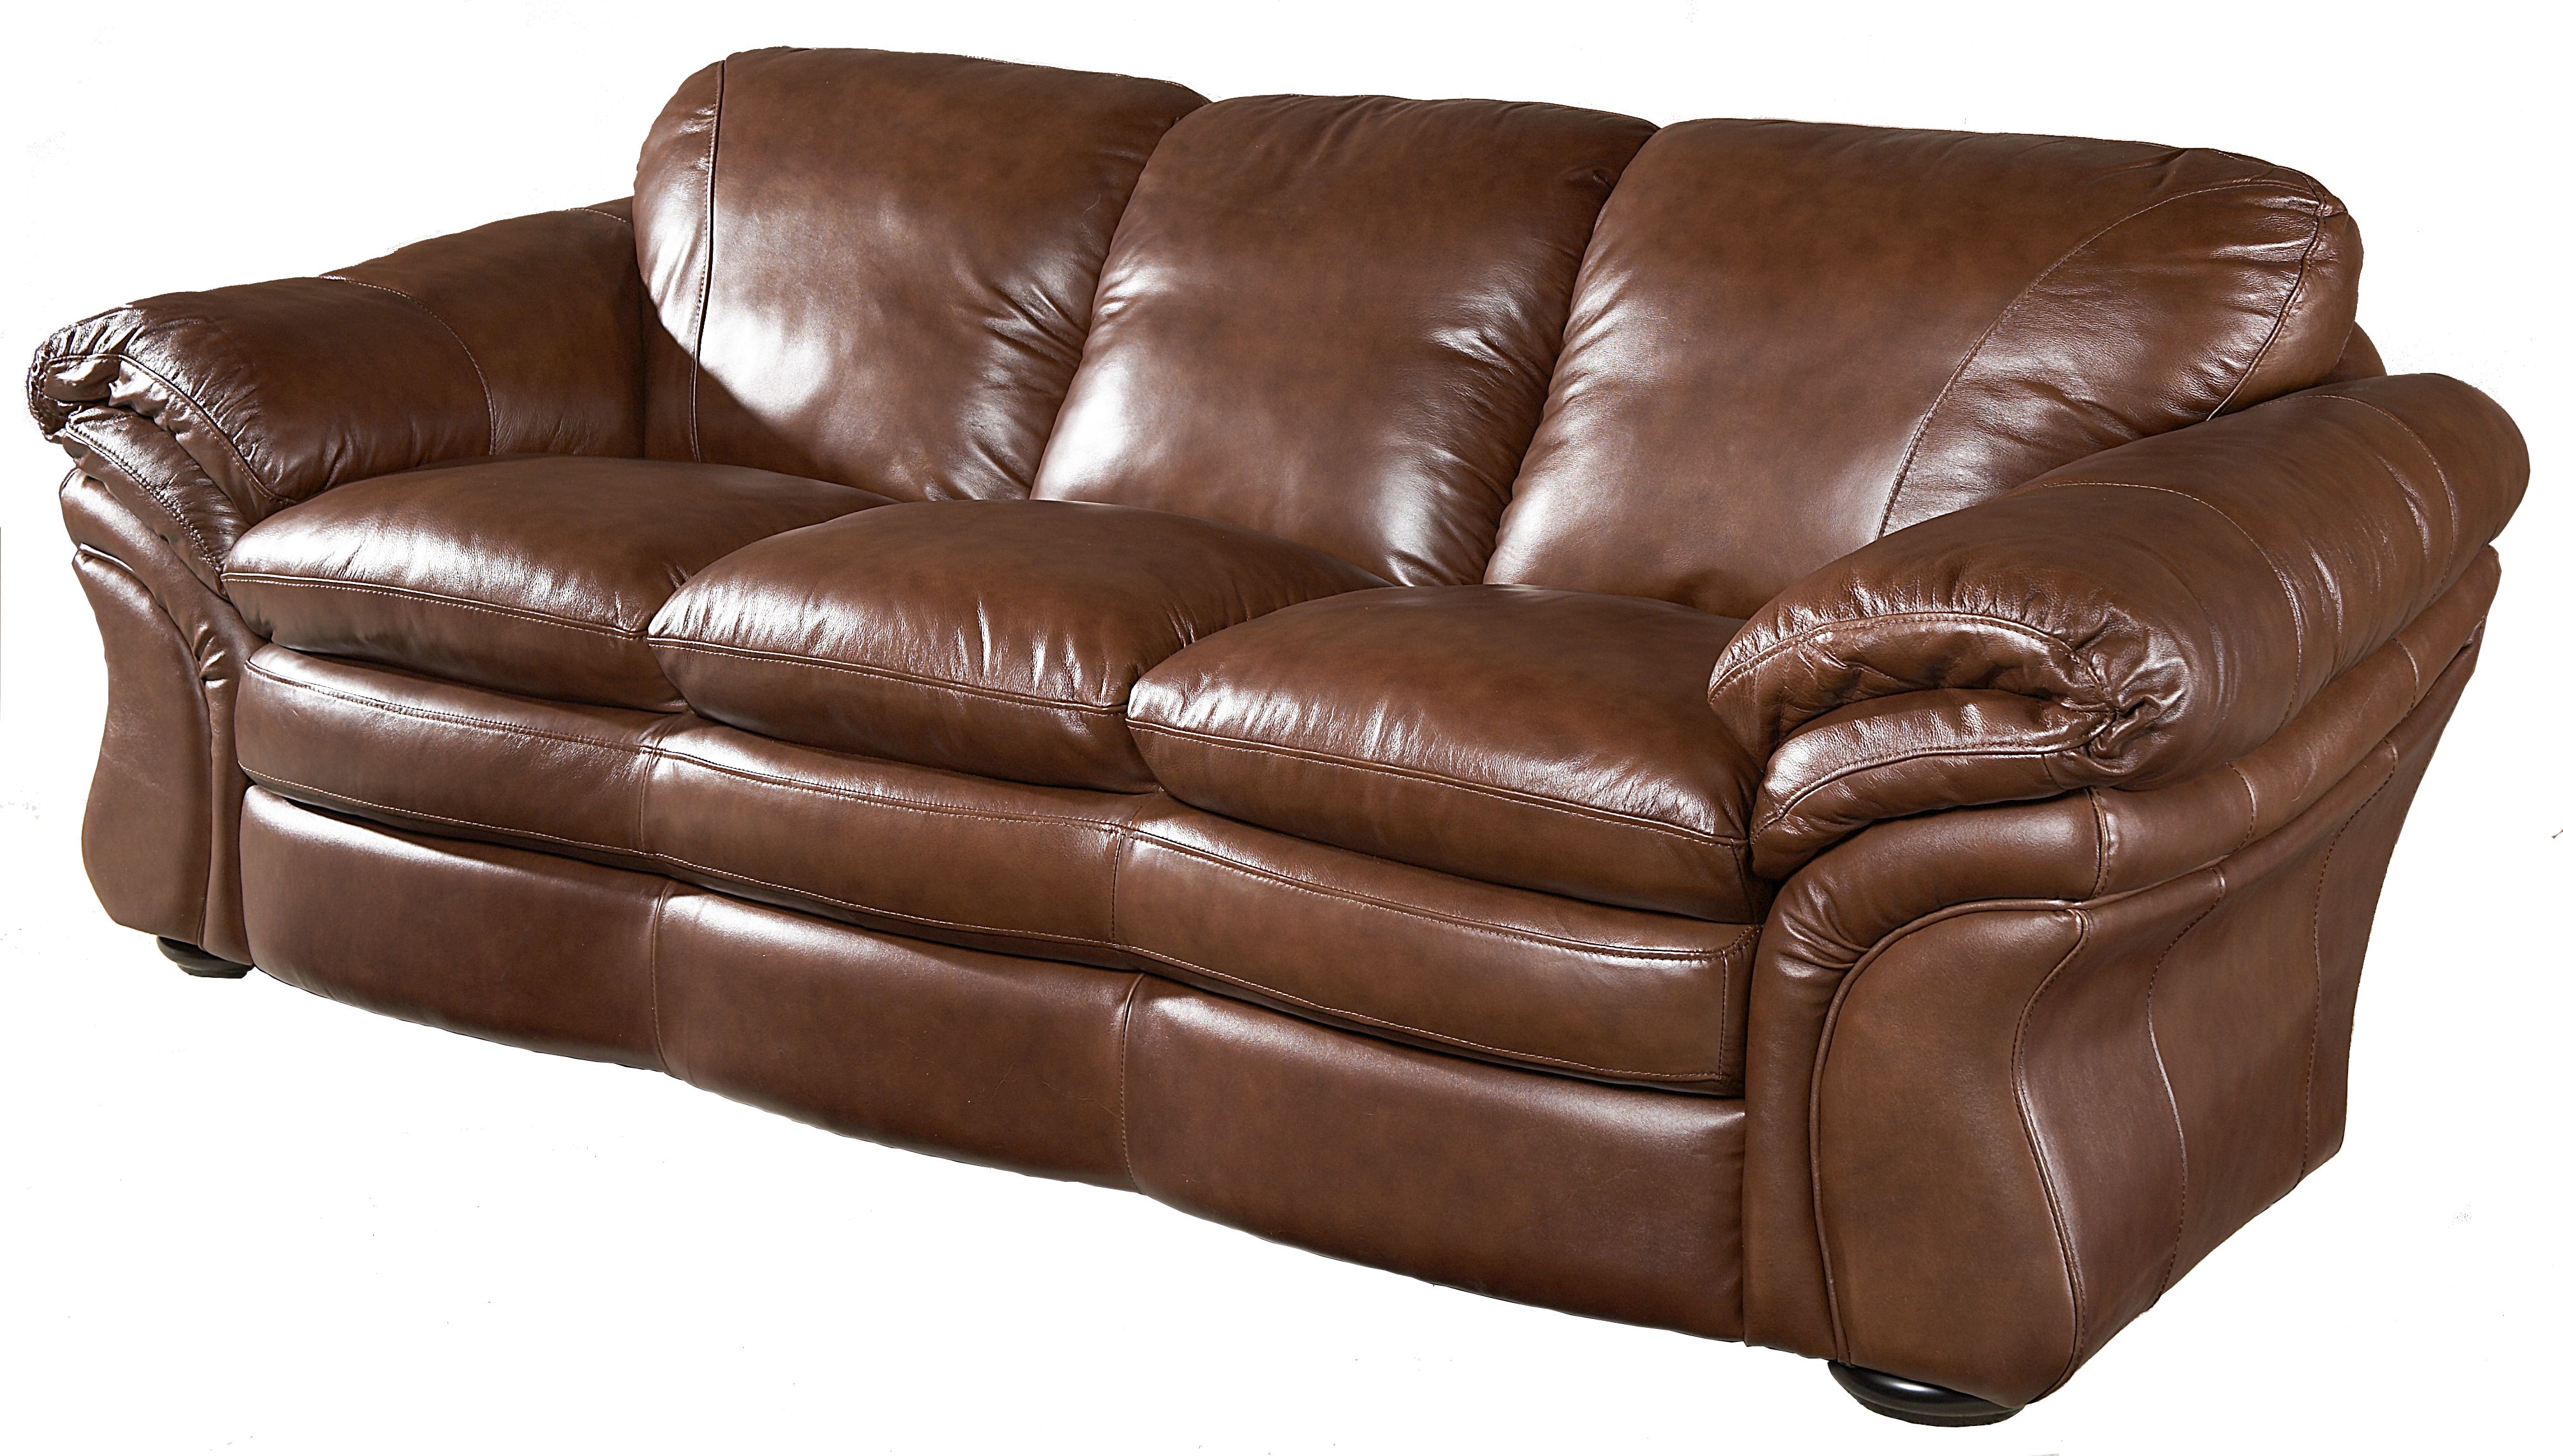 custom leather sofa jensen beach